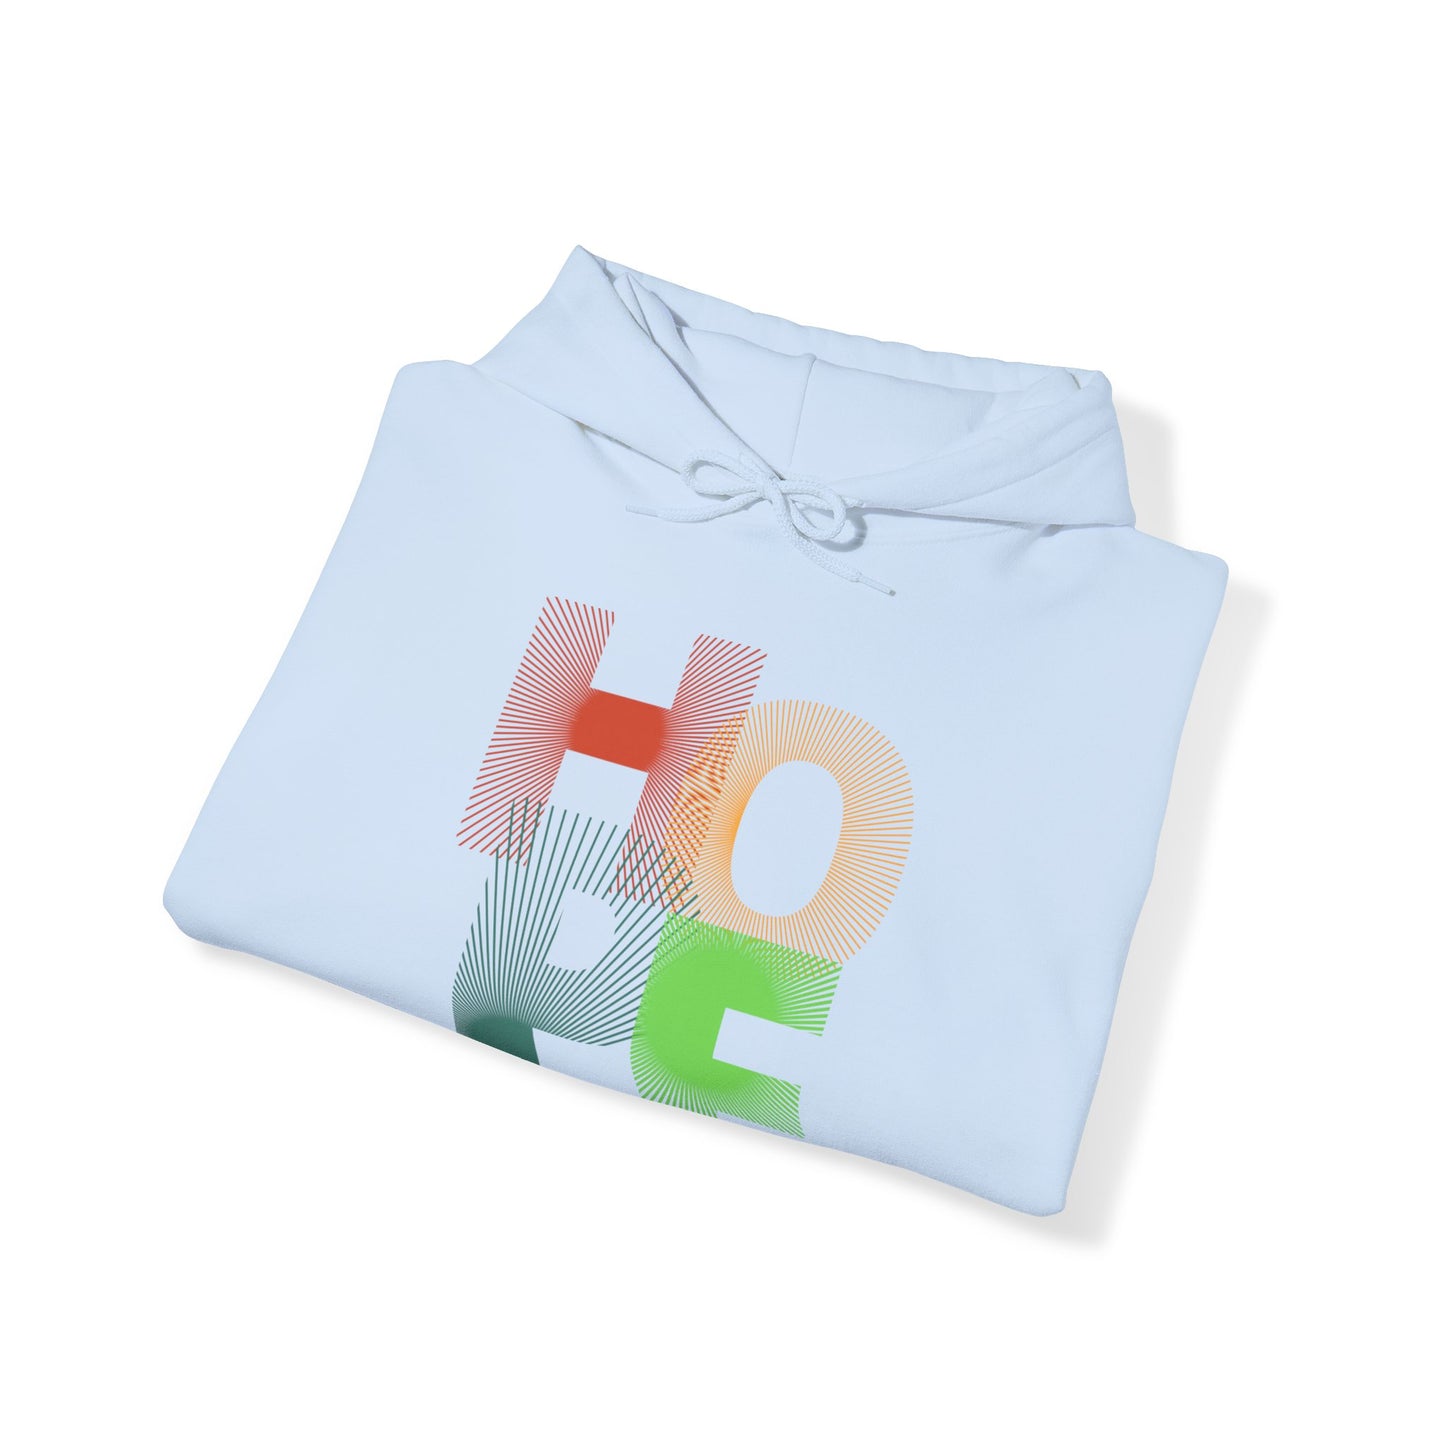 Hope Hooded Sweatshirt